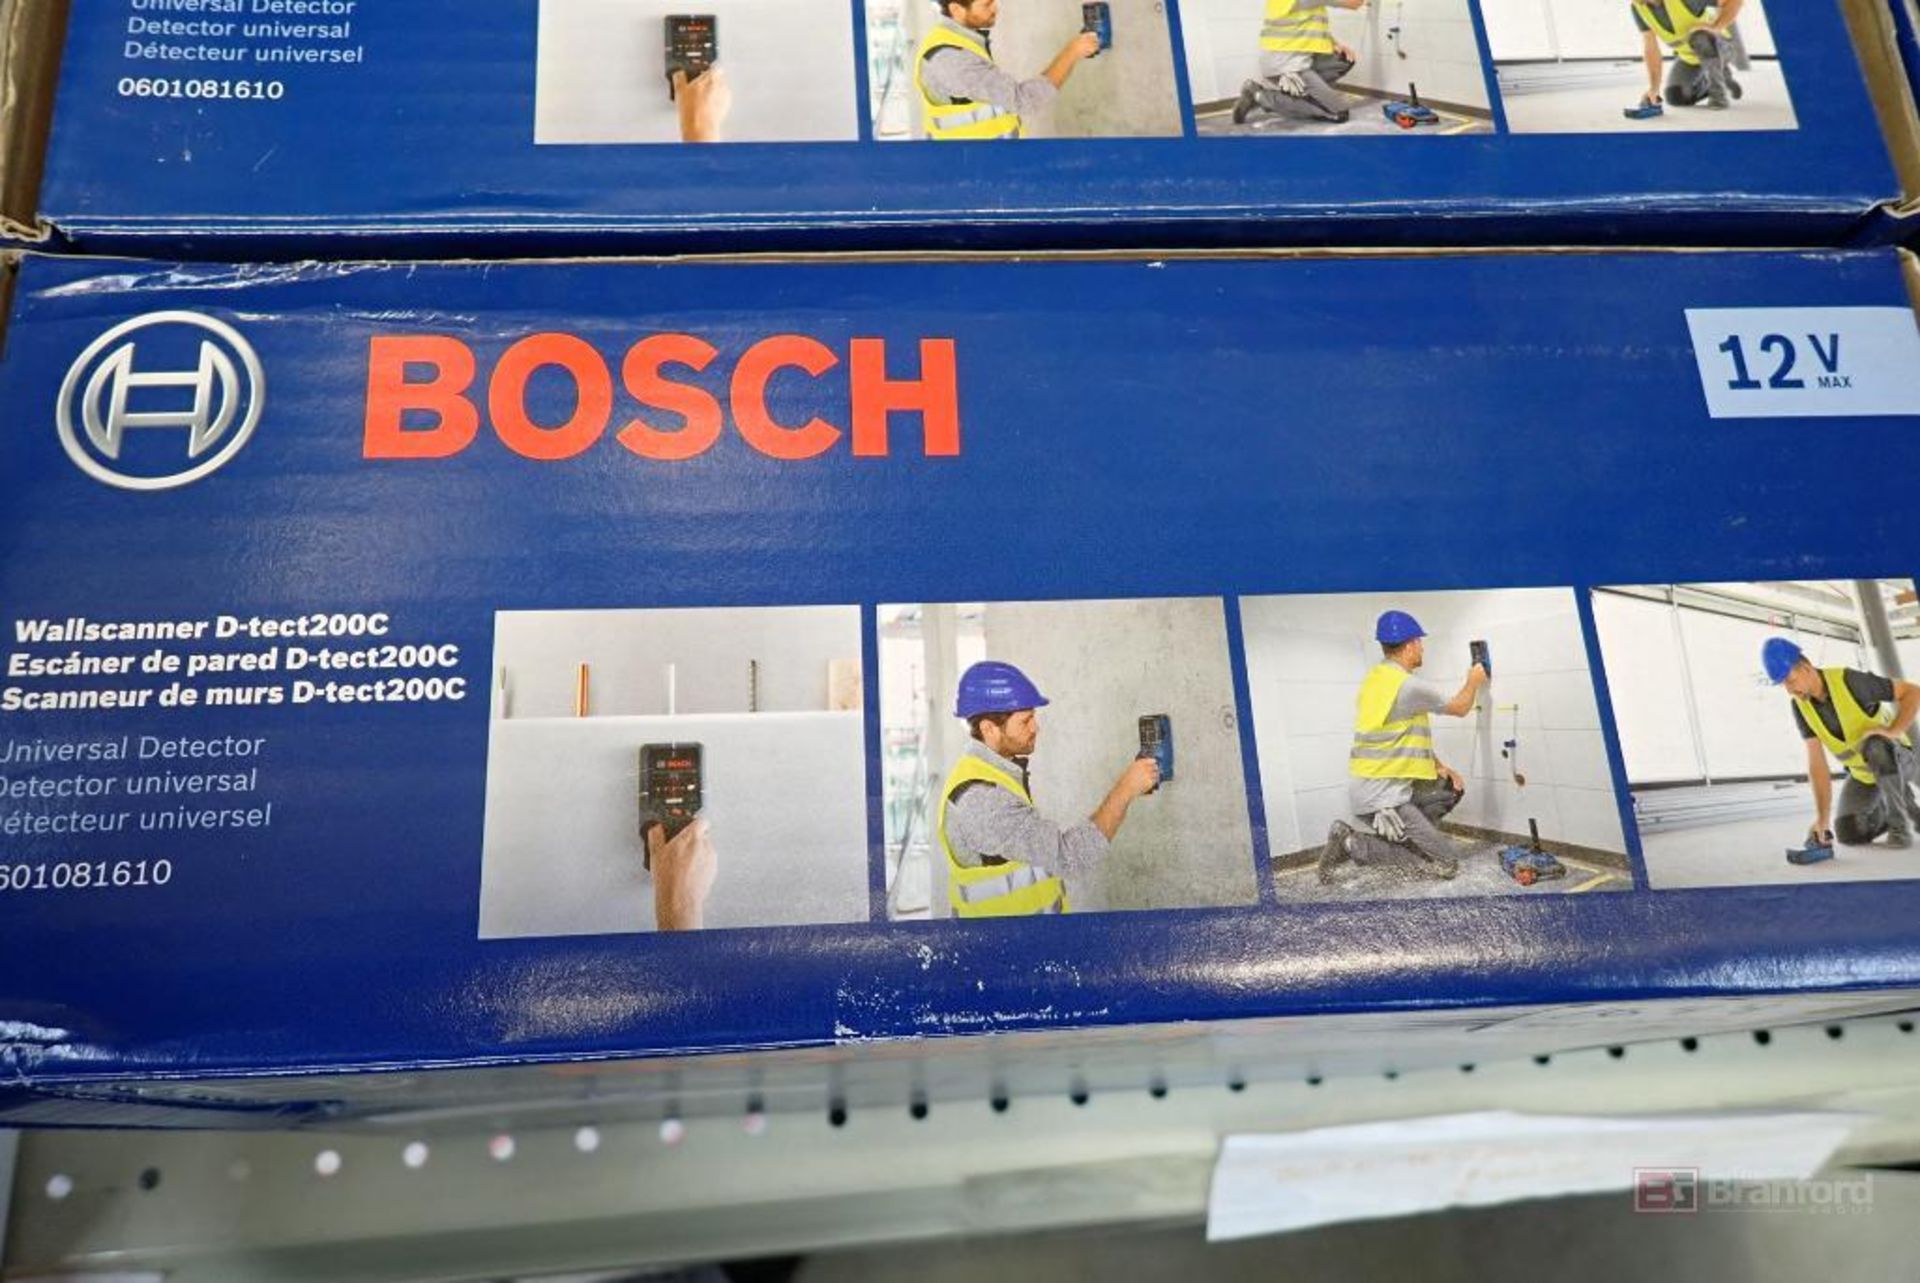 Bosch D-tect200C Wallscanner Kit - Image 5 of 5